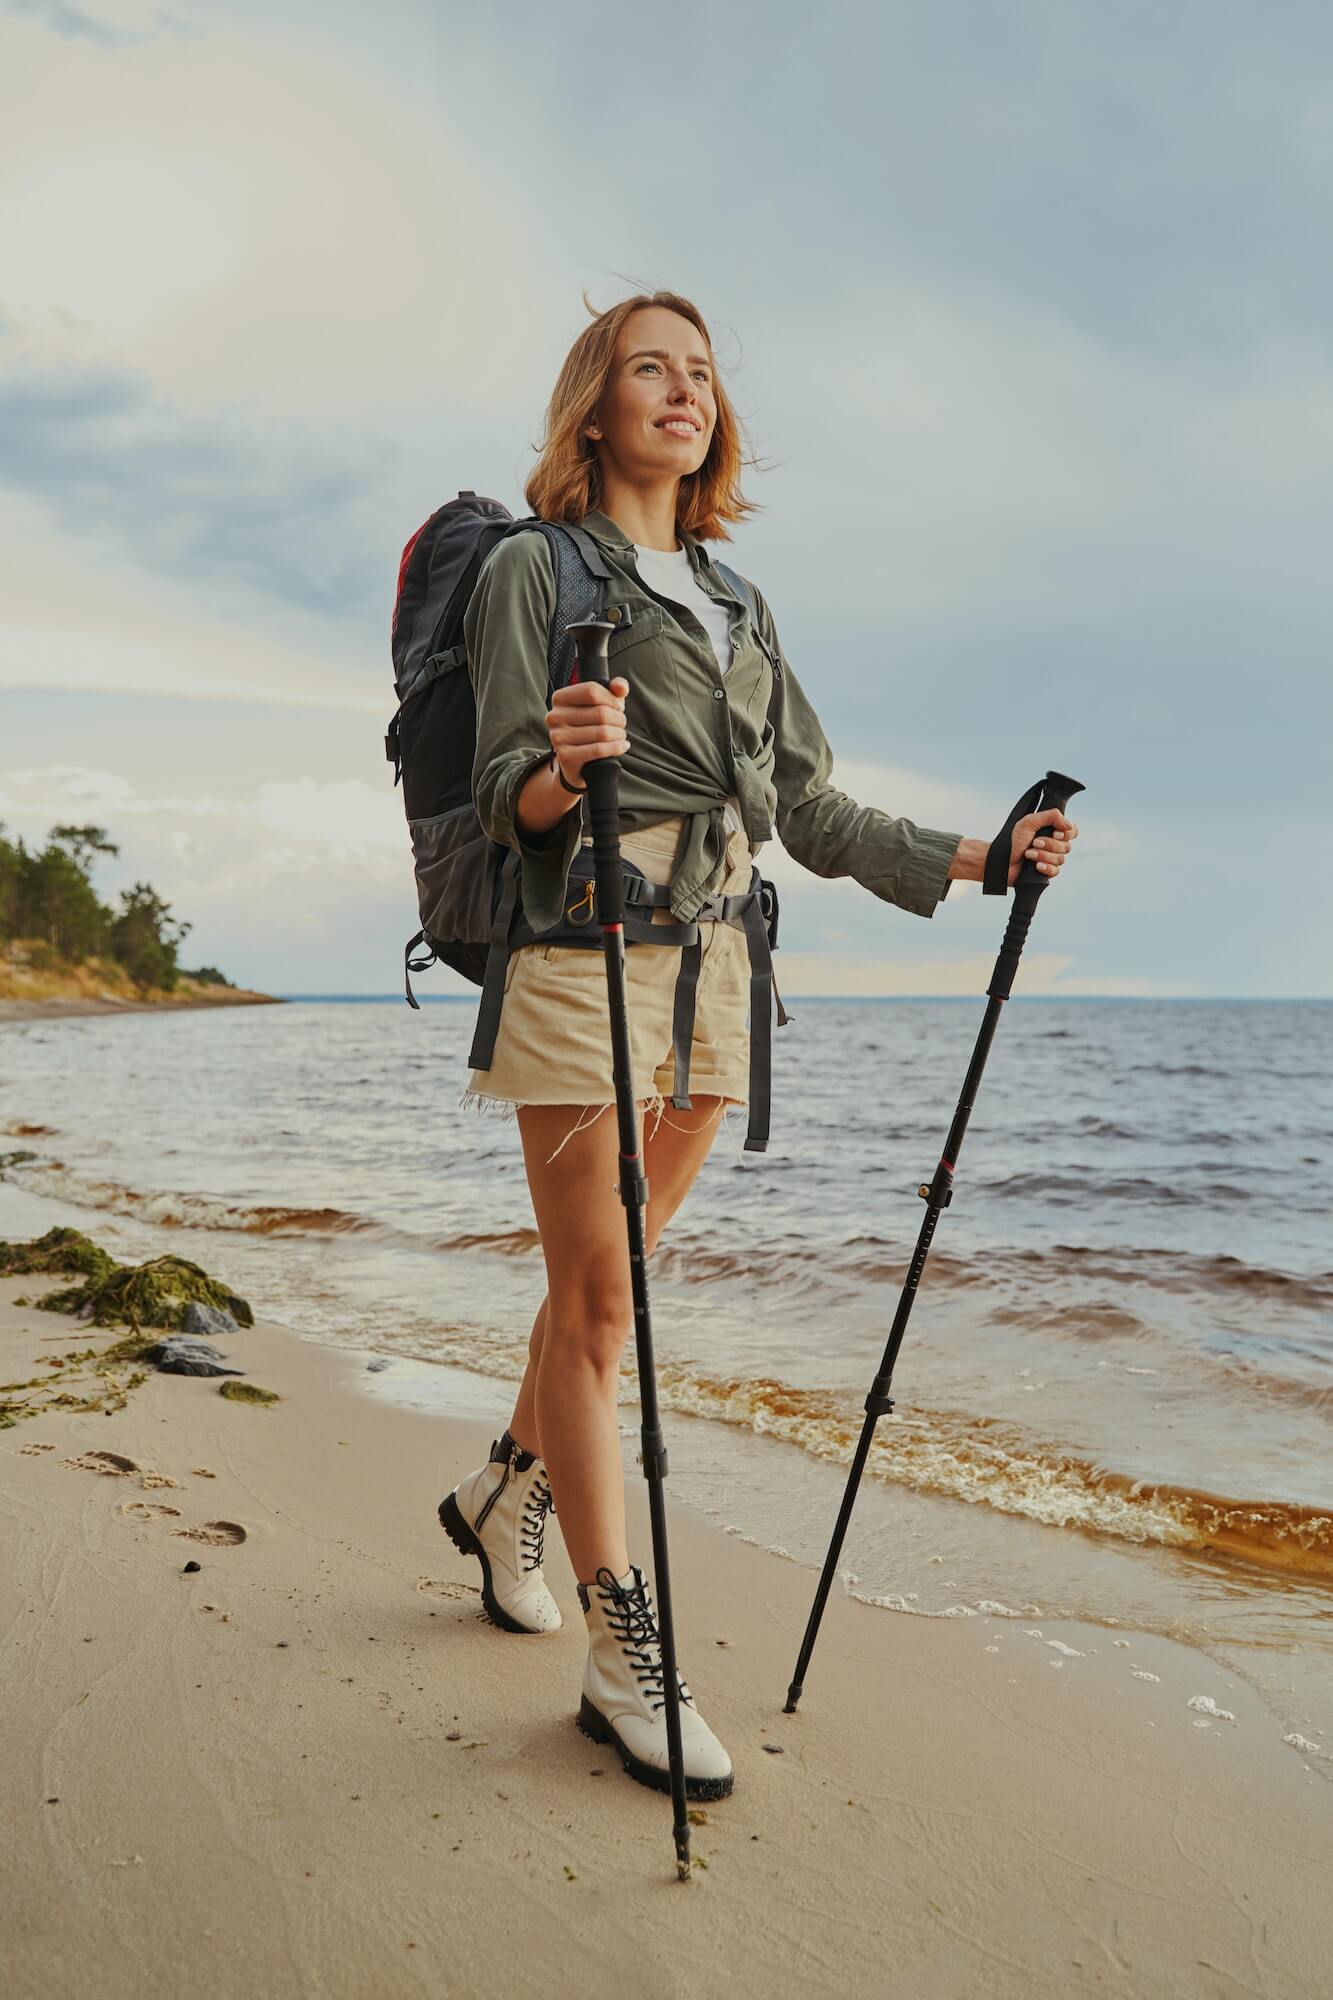 optimistic-traveller-using-walking-poles-during-beach-stroll-1.jpg